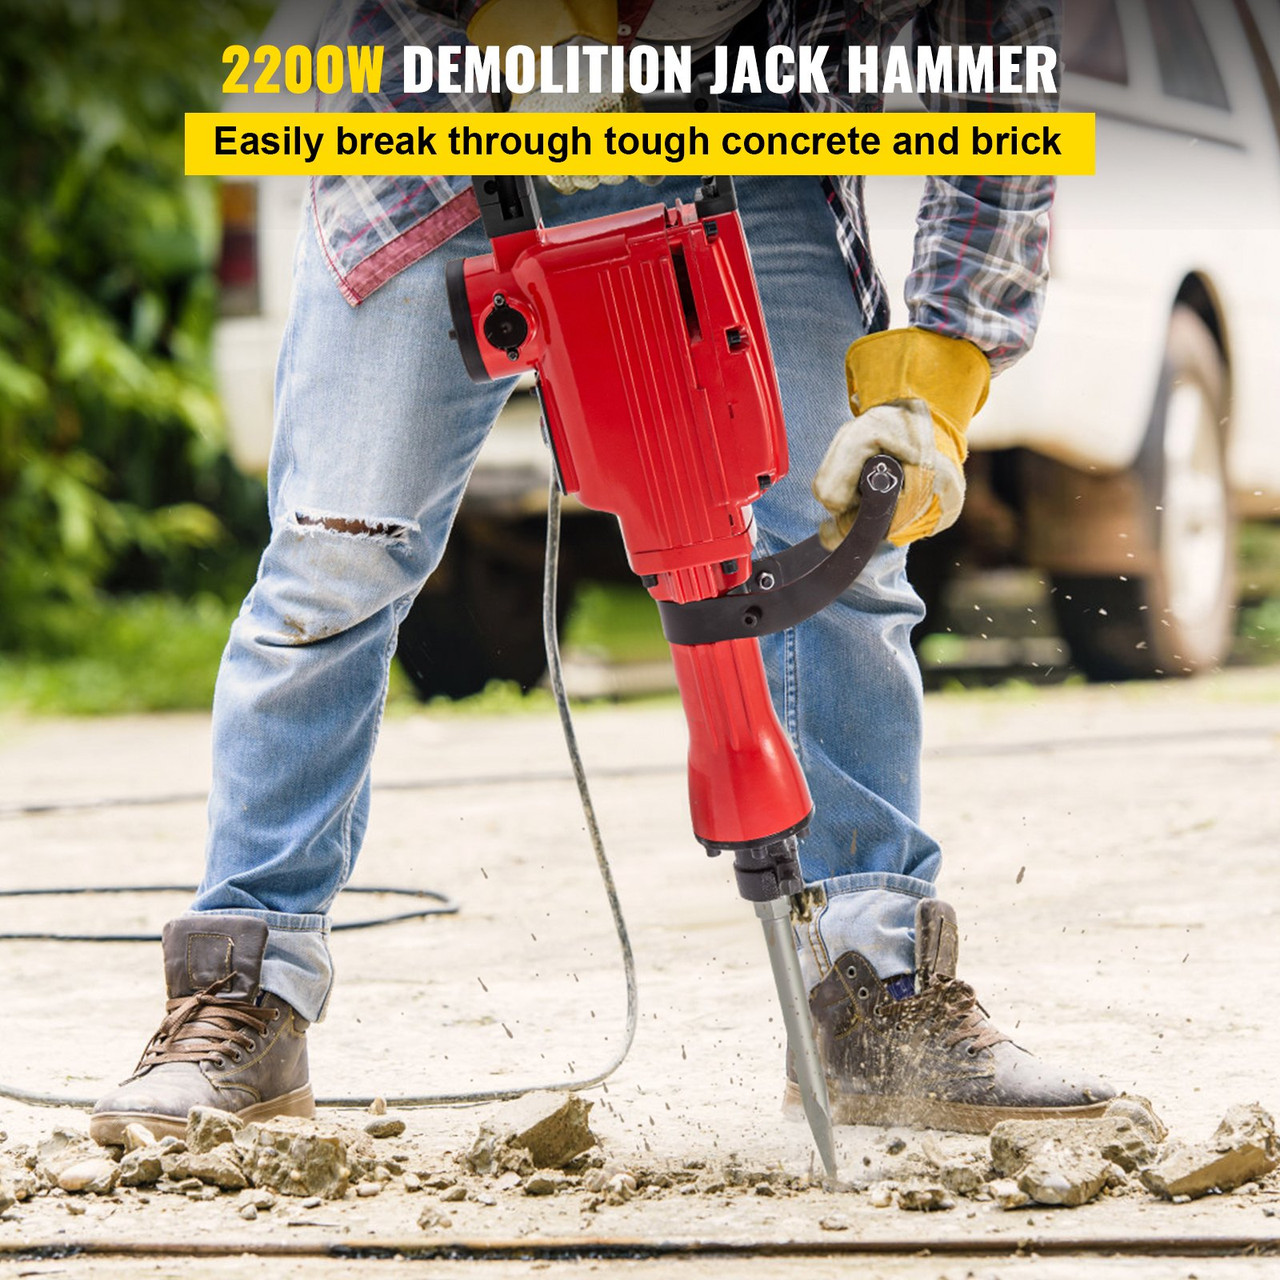 Demolition Jack Hammer Jack Hammer Concrete Breaker 1200 BPM Heavy Duty Electric Jack Hammer 3 Chisel Bit W/Gloves & 360ø Swiveling Front Handle for Trenching, Chipping, Breaking Holes